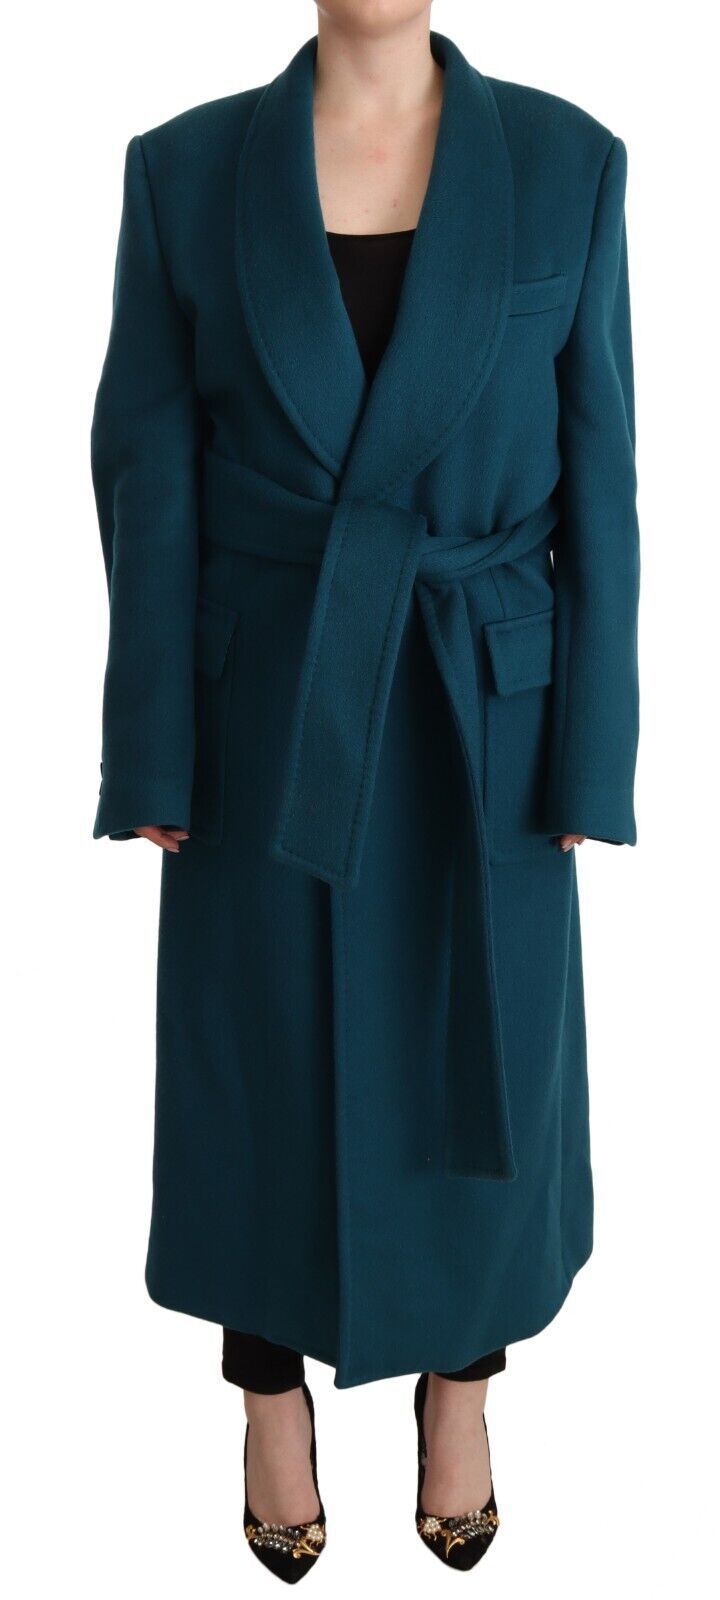 Dolce & Gabbana Blue Green Wool Long Sleeves Trench Coat Jacket